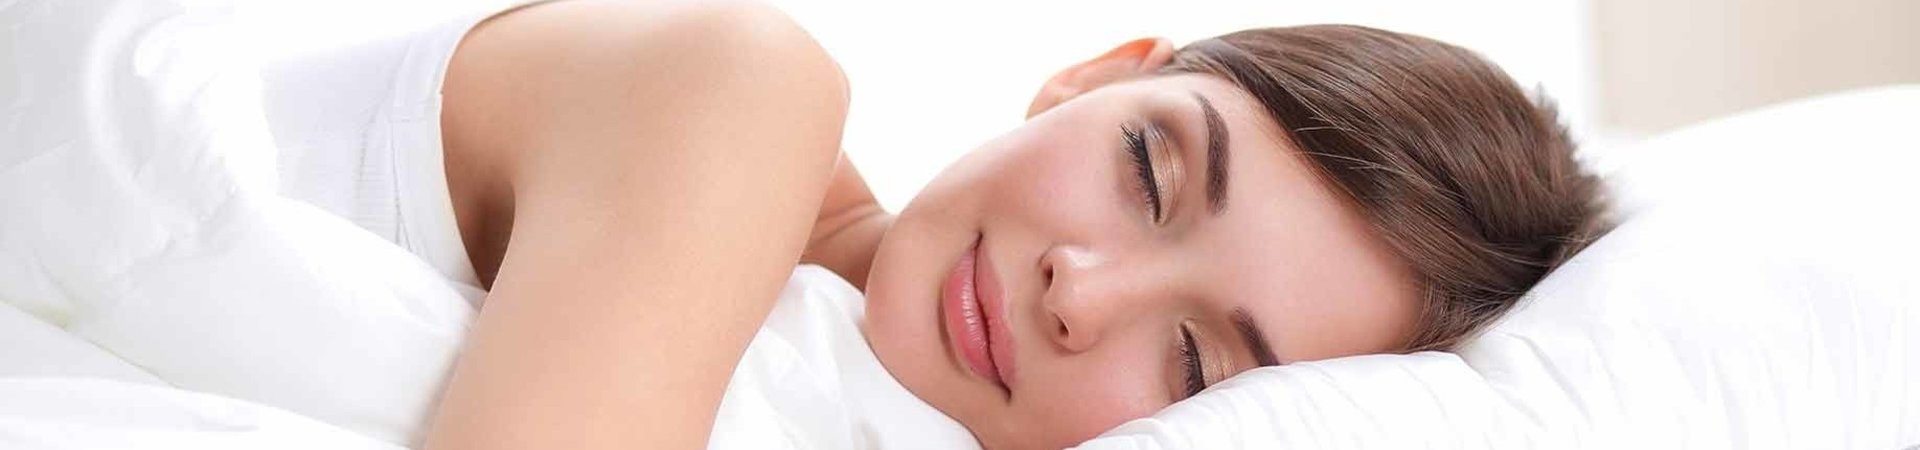 Posteljnina vpliva na naš spanec